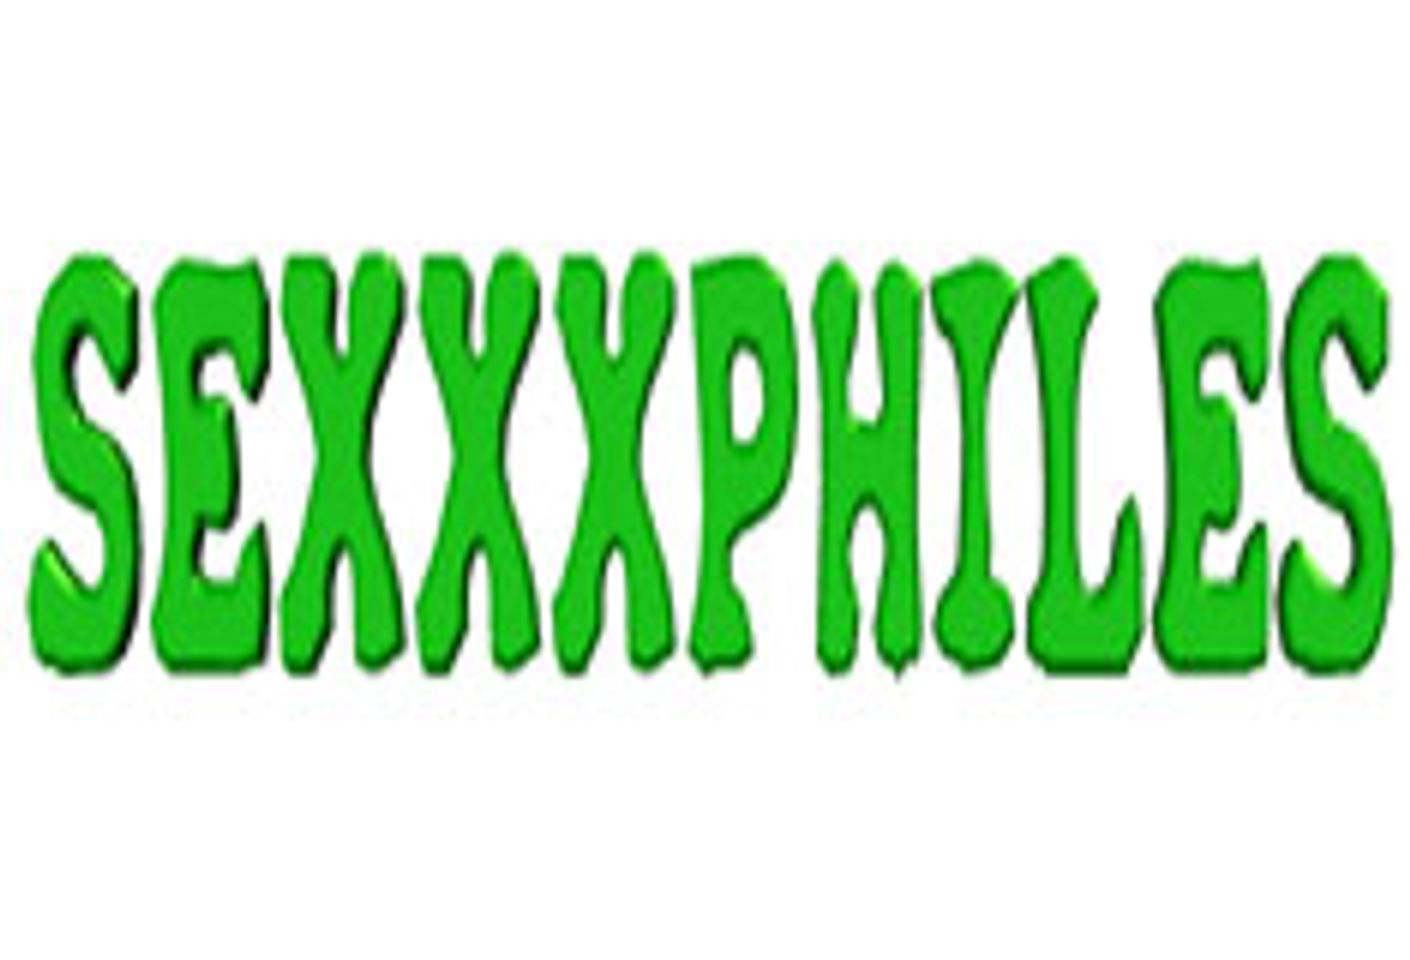 Sexxxphiles.com Relaunches